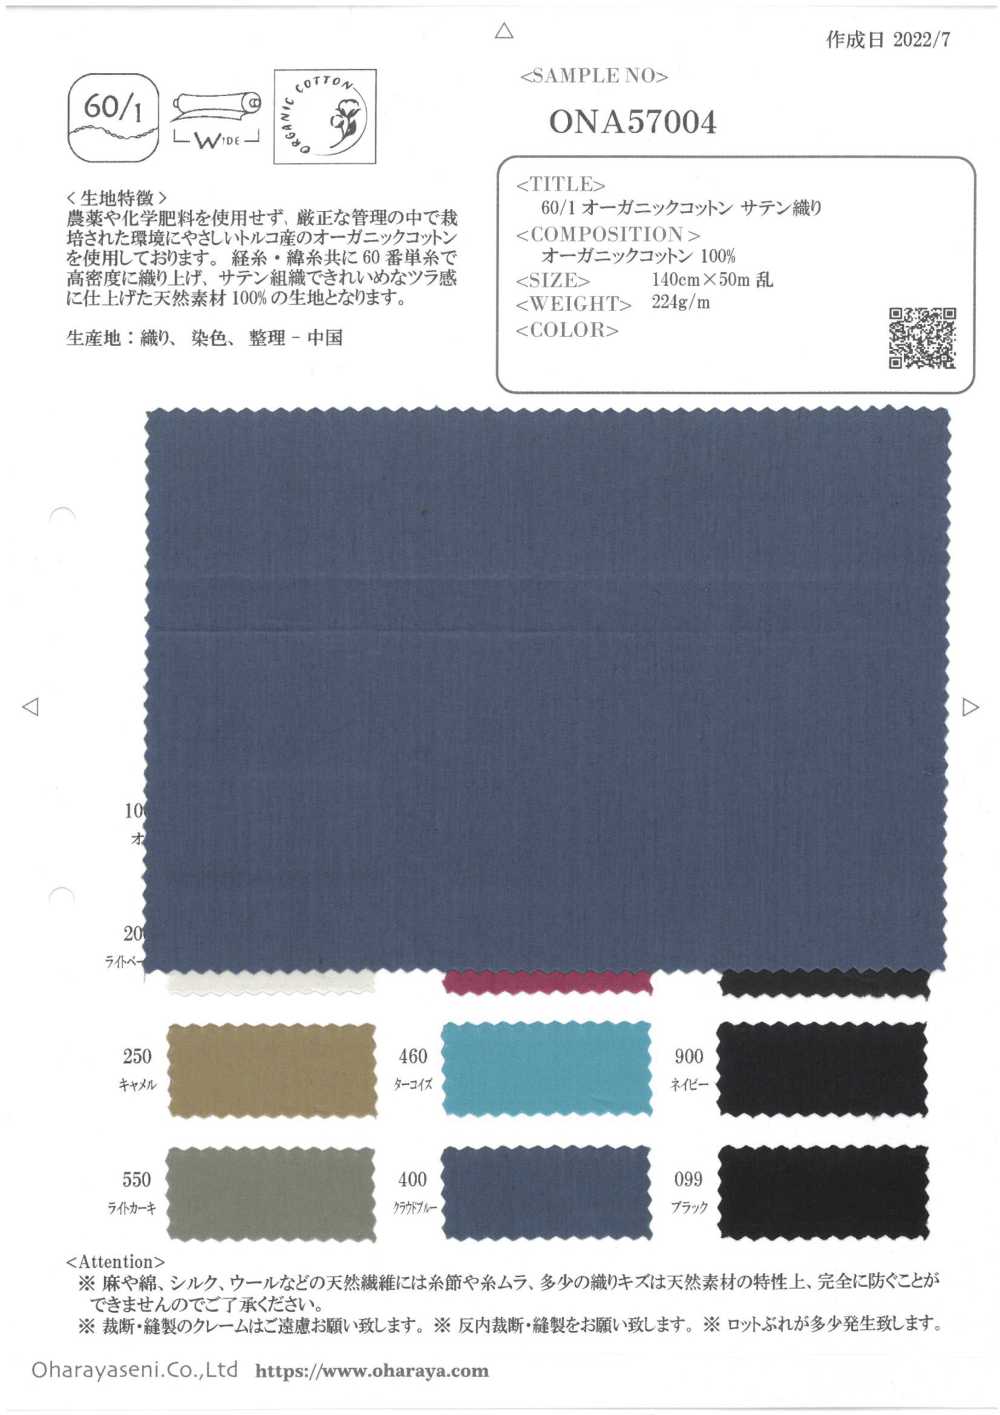 ONA57004 60/1 有机棉缎纹[面料] 小原屋繊維